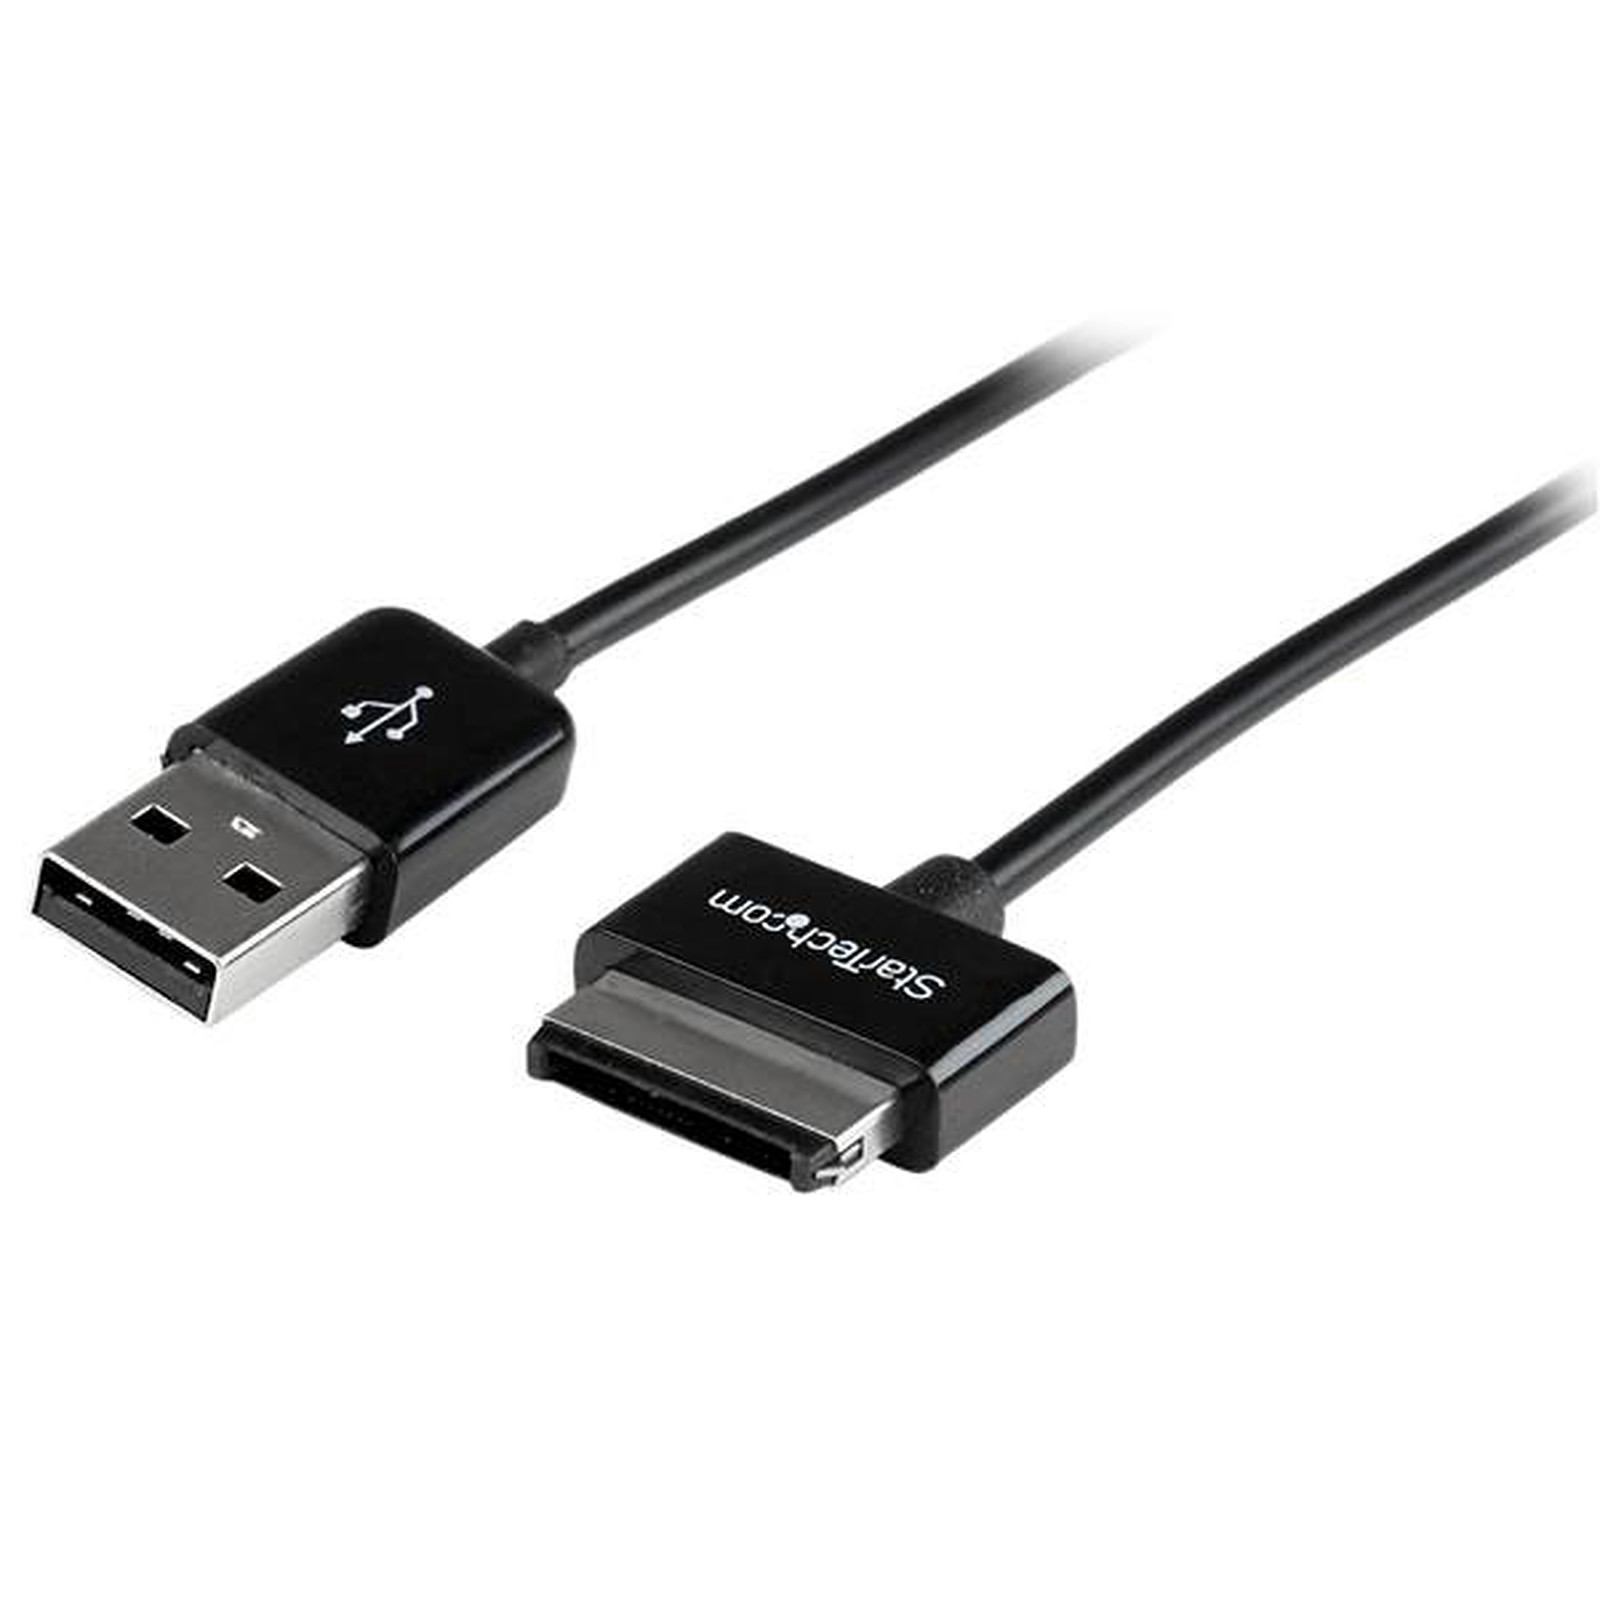 StarTech.com Cable USB pour ASUS Transformer Pad et Eee Pad Transformer / Slider - USB StarTech.com